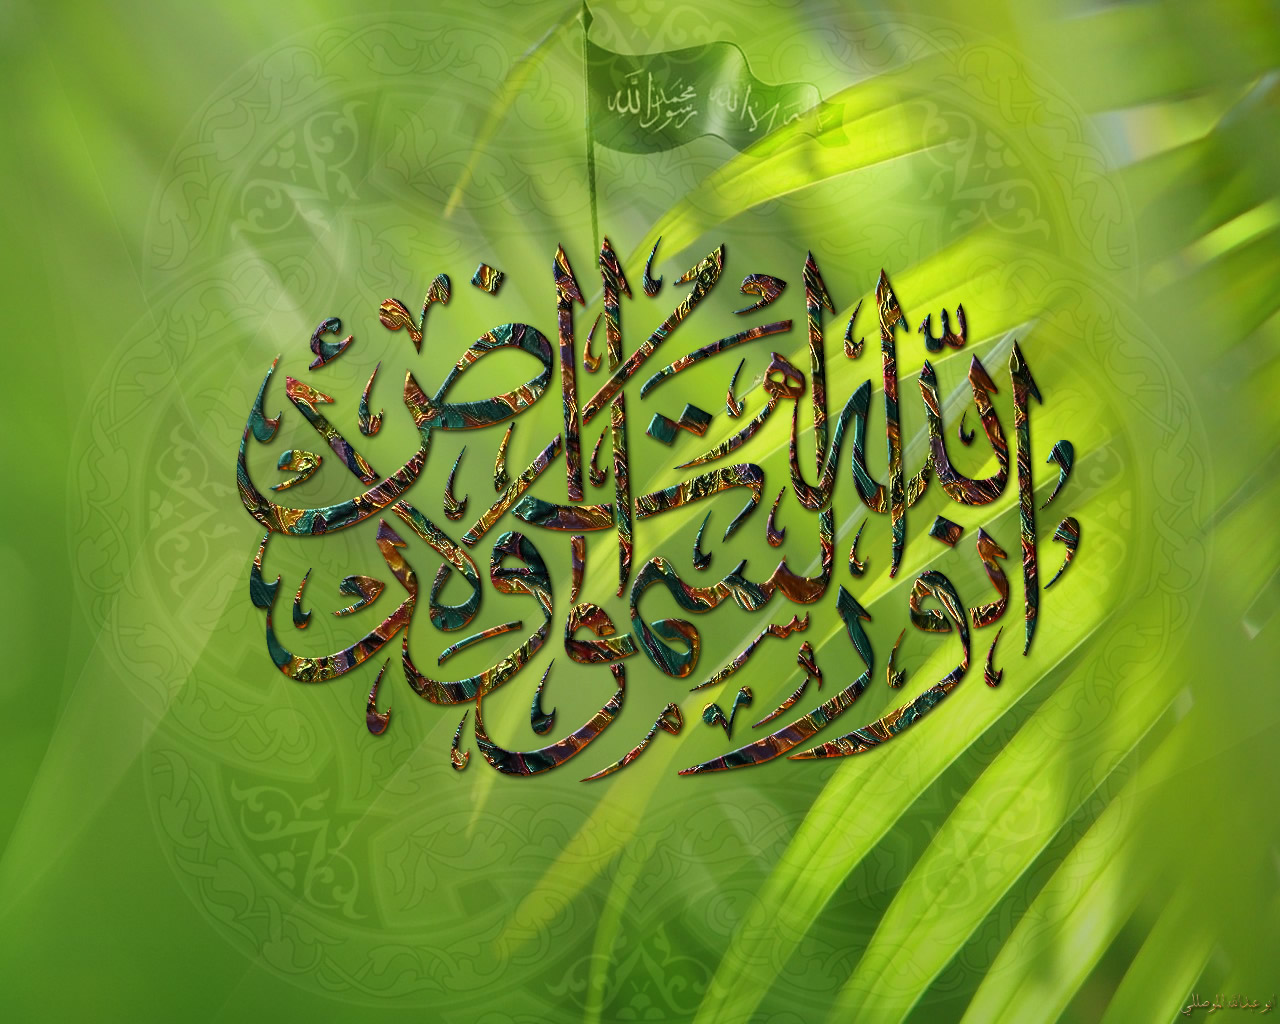 Islamic Urdu Wallpaper Free Download - Islamic Photos 3gp - 1280x1024  Wallpaper 